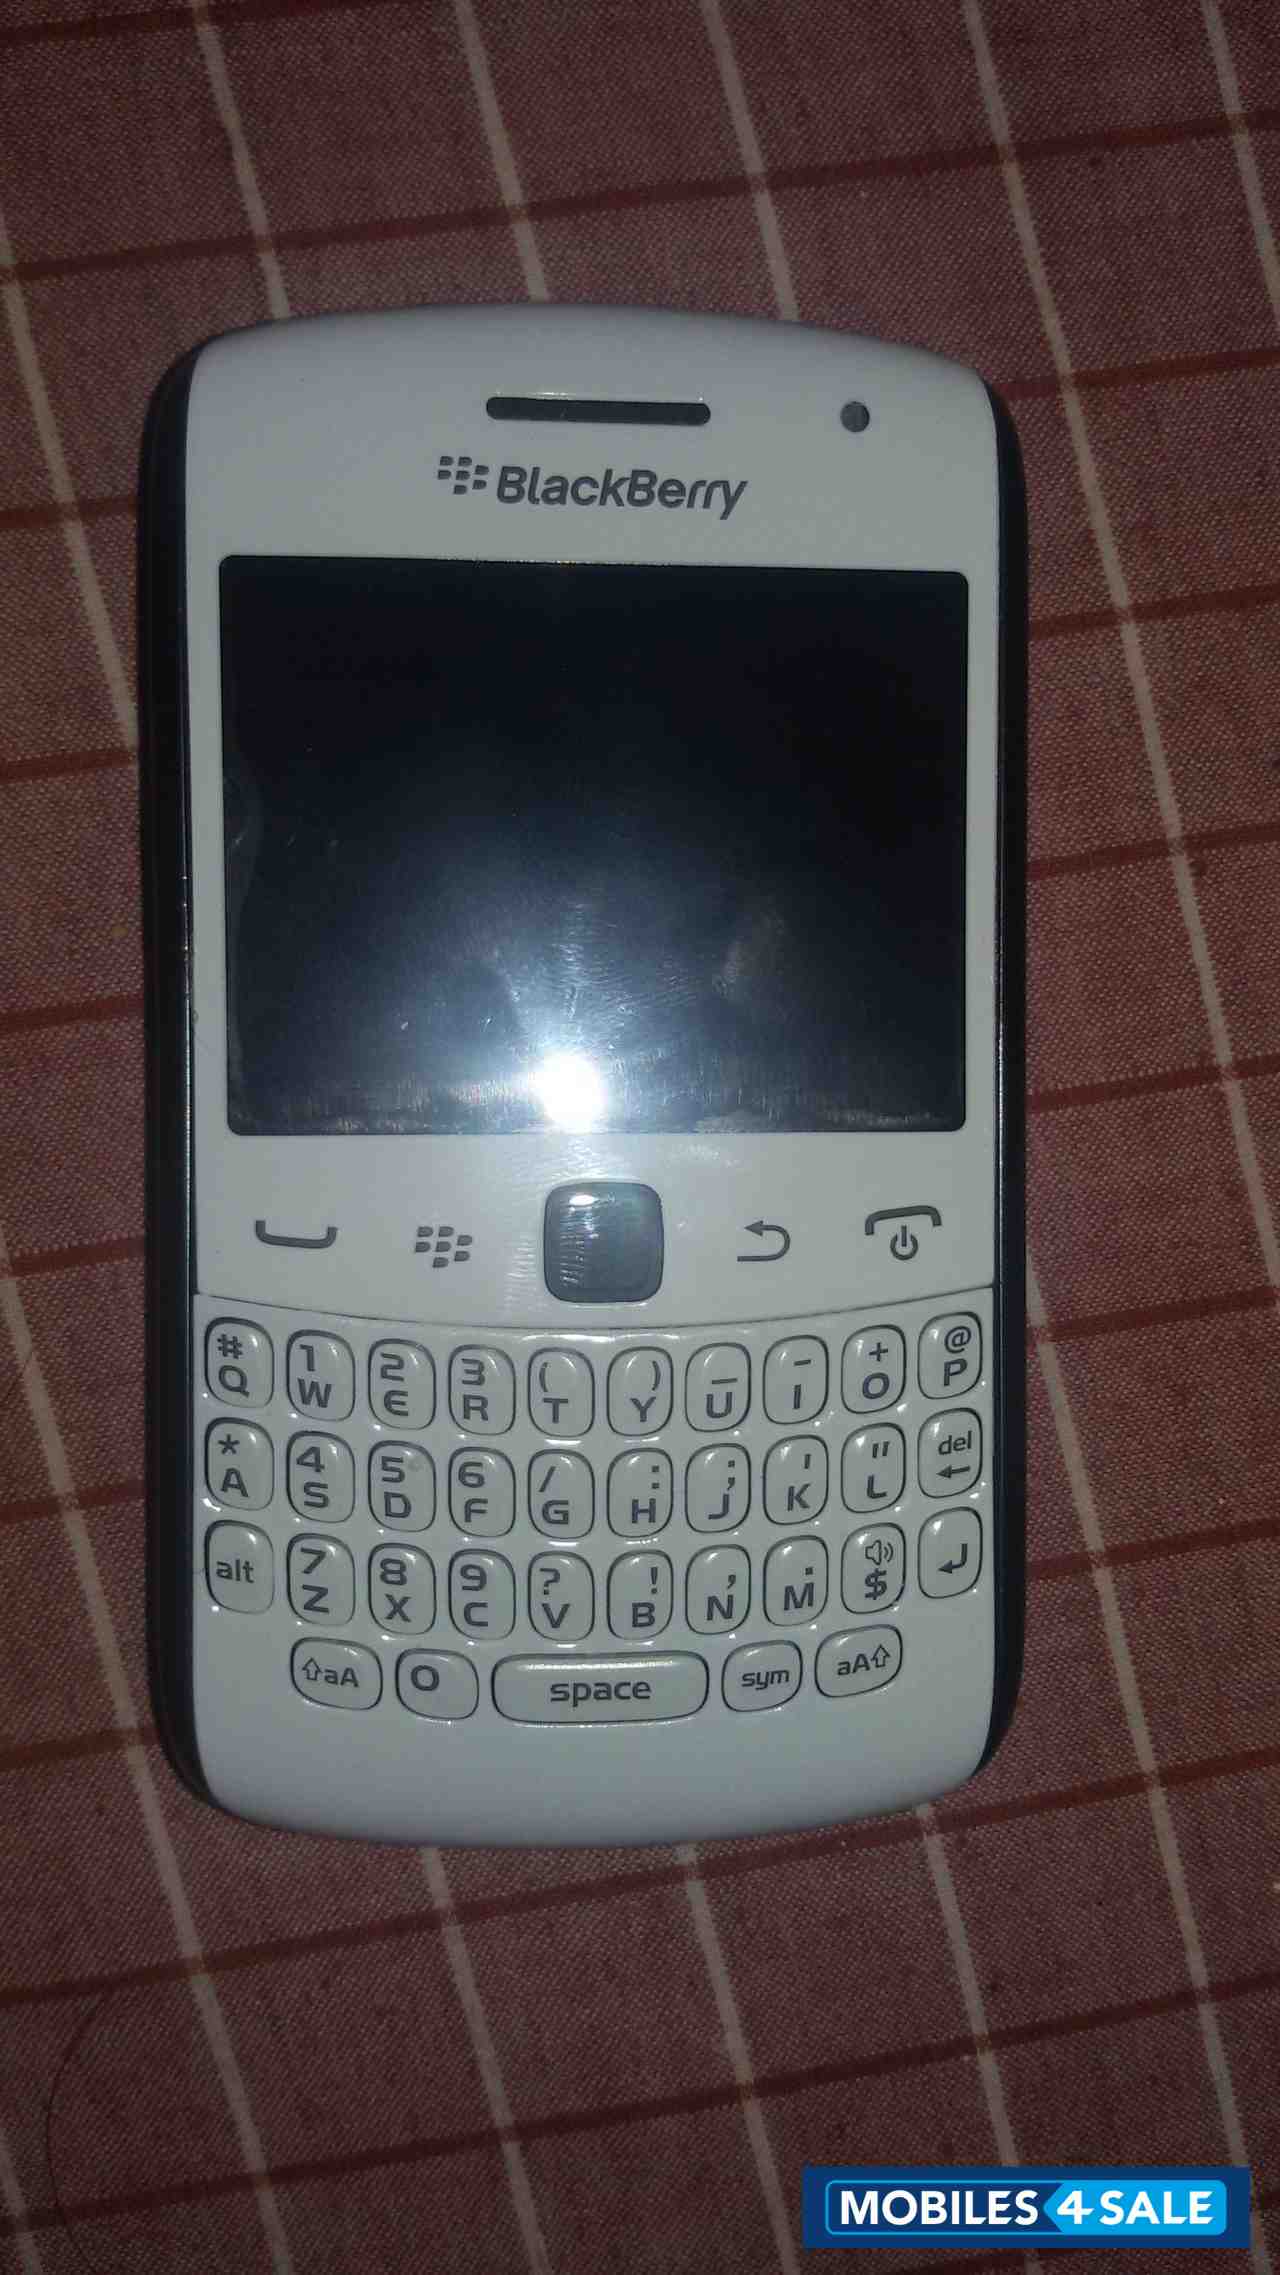 White BlackBerry Curve 9360